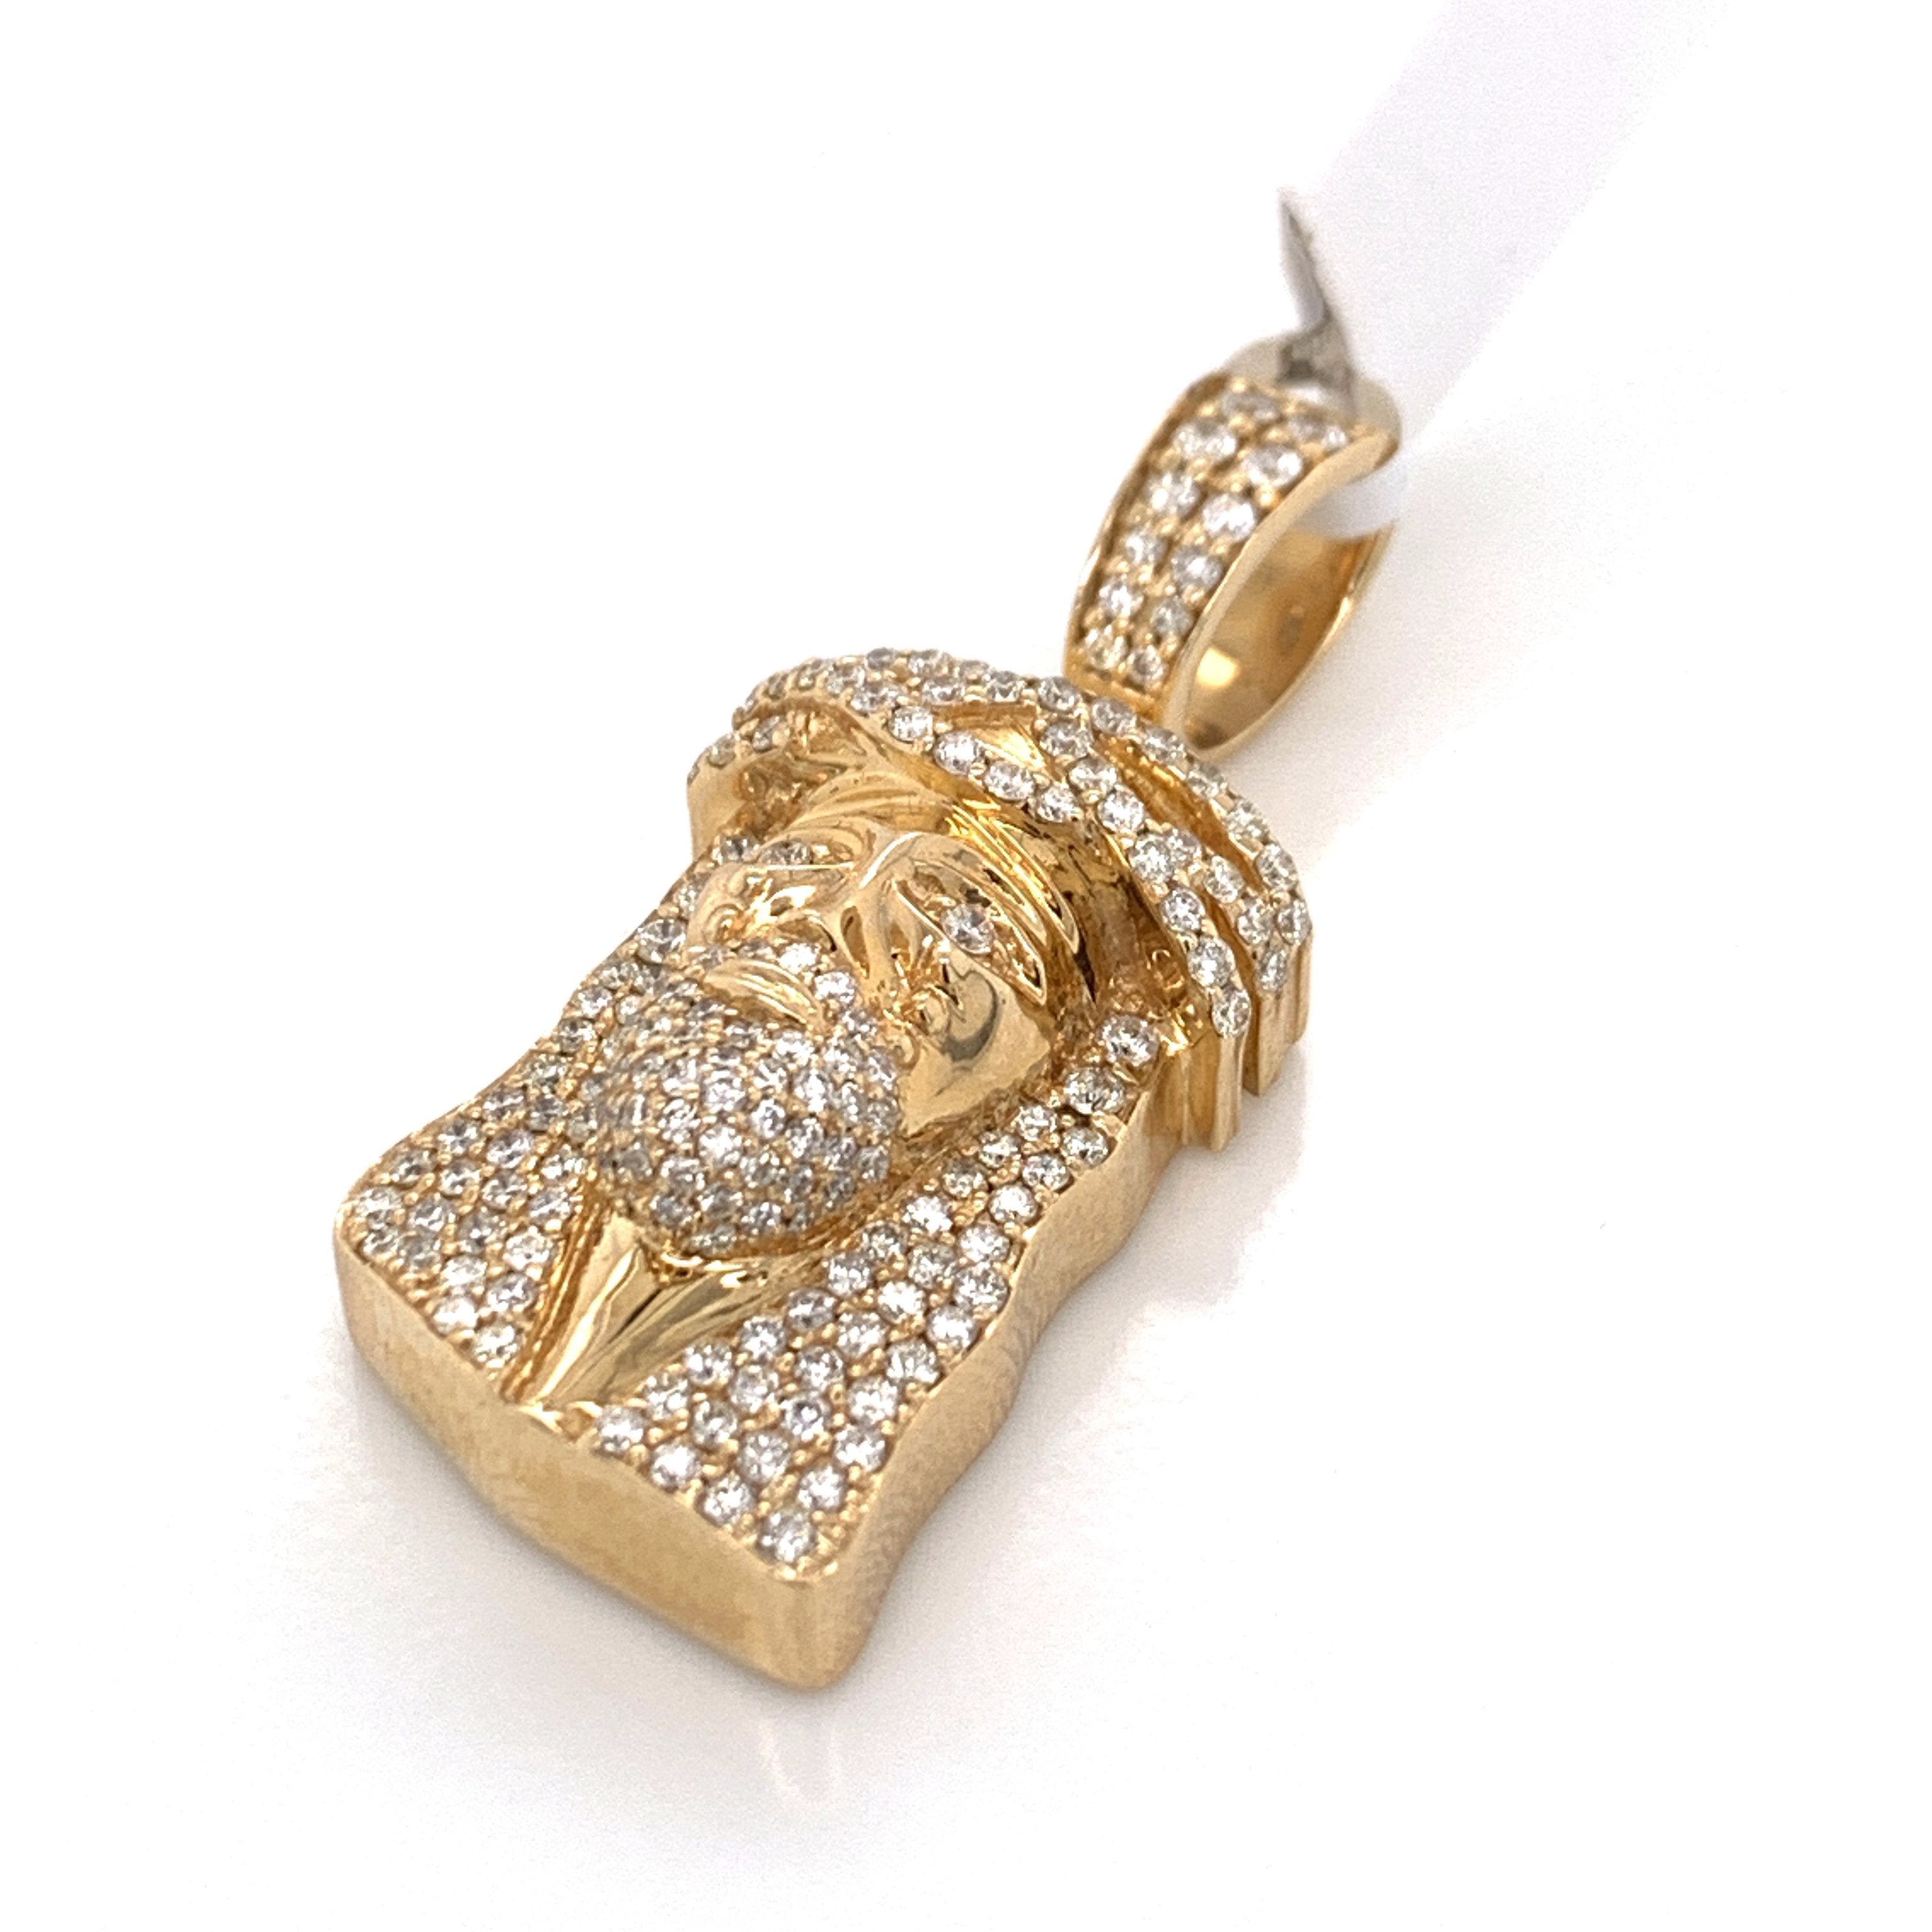 1.20 CT. Diamond Jesus Pendant in 14KT Gold - White Carat Diamonds 